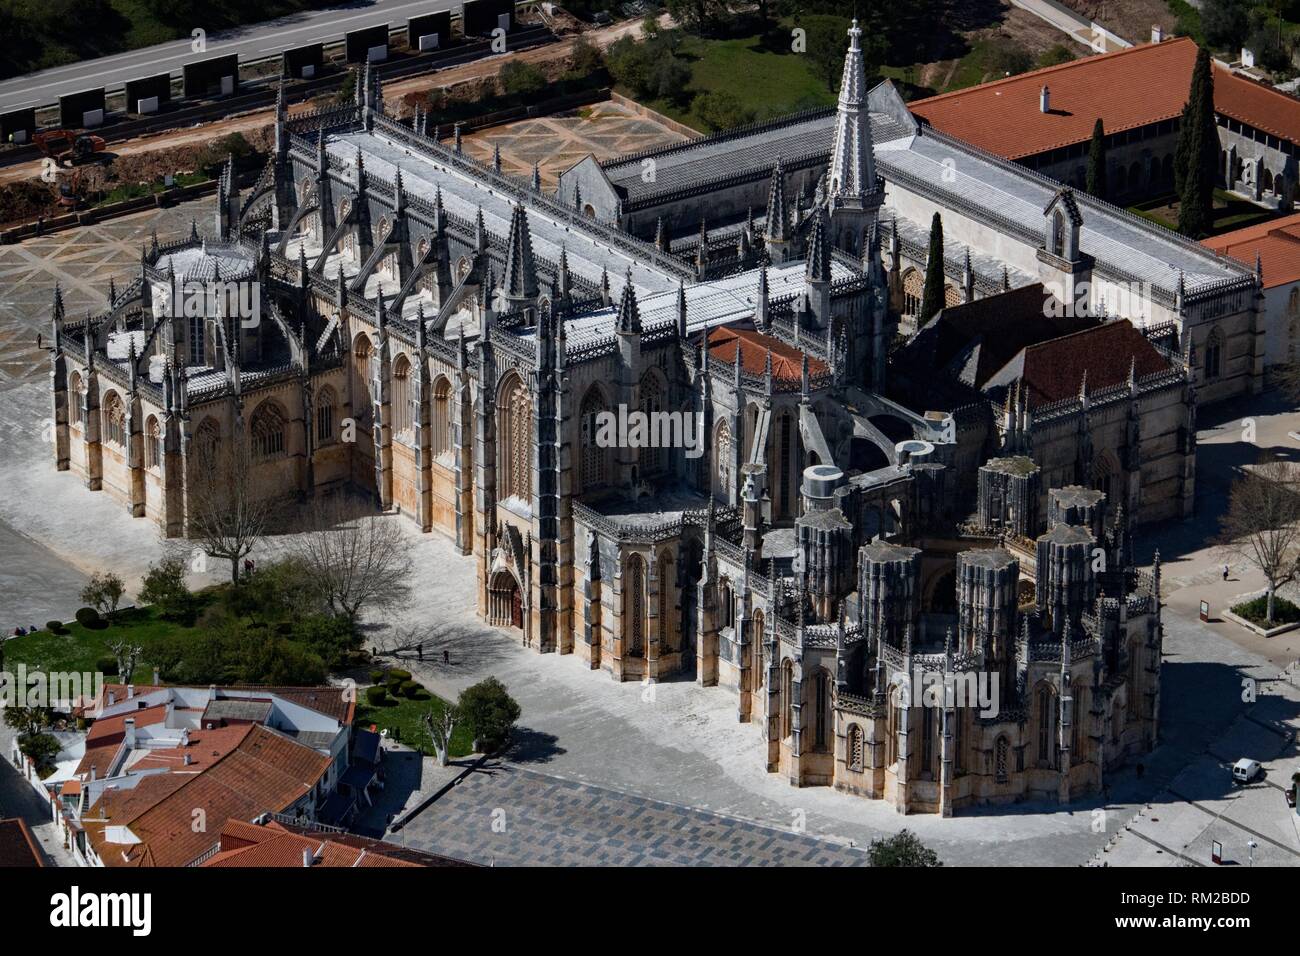 Batalha Monastery, Portugal - Aerial Stock Photo